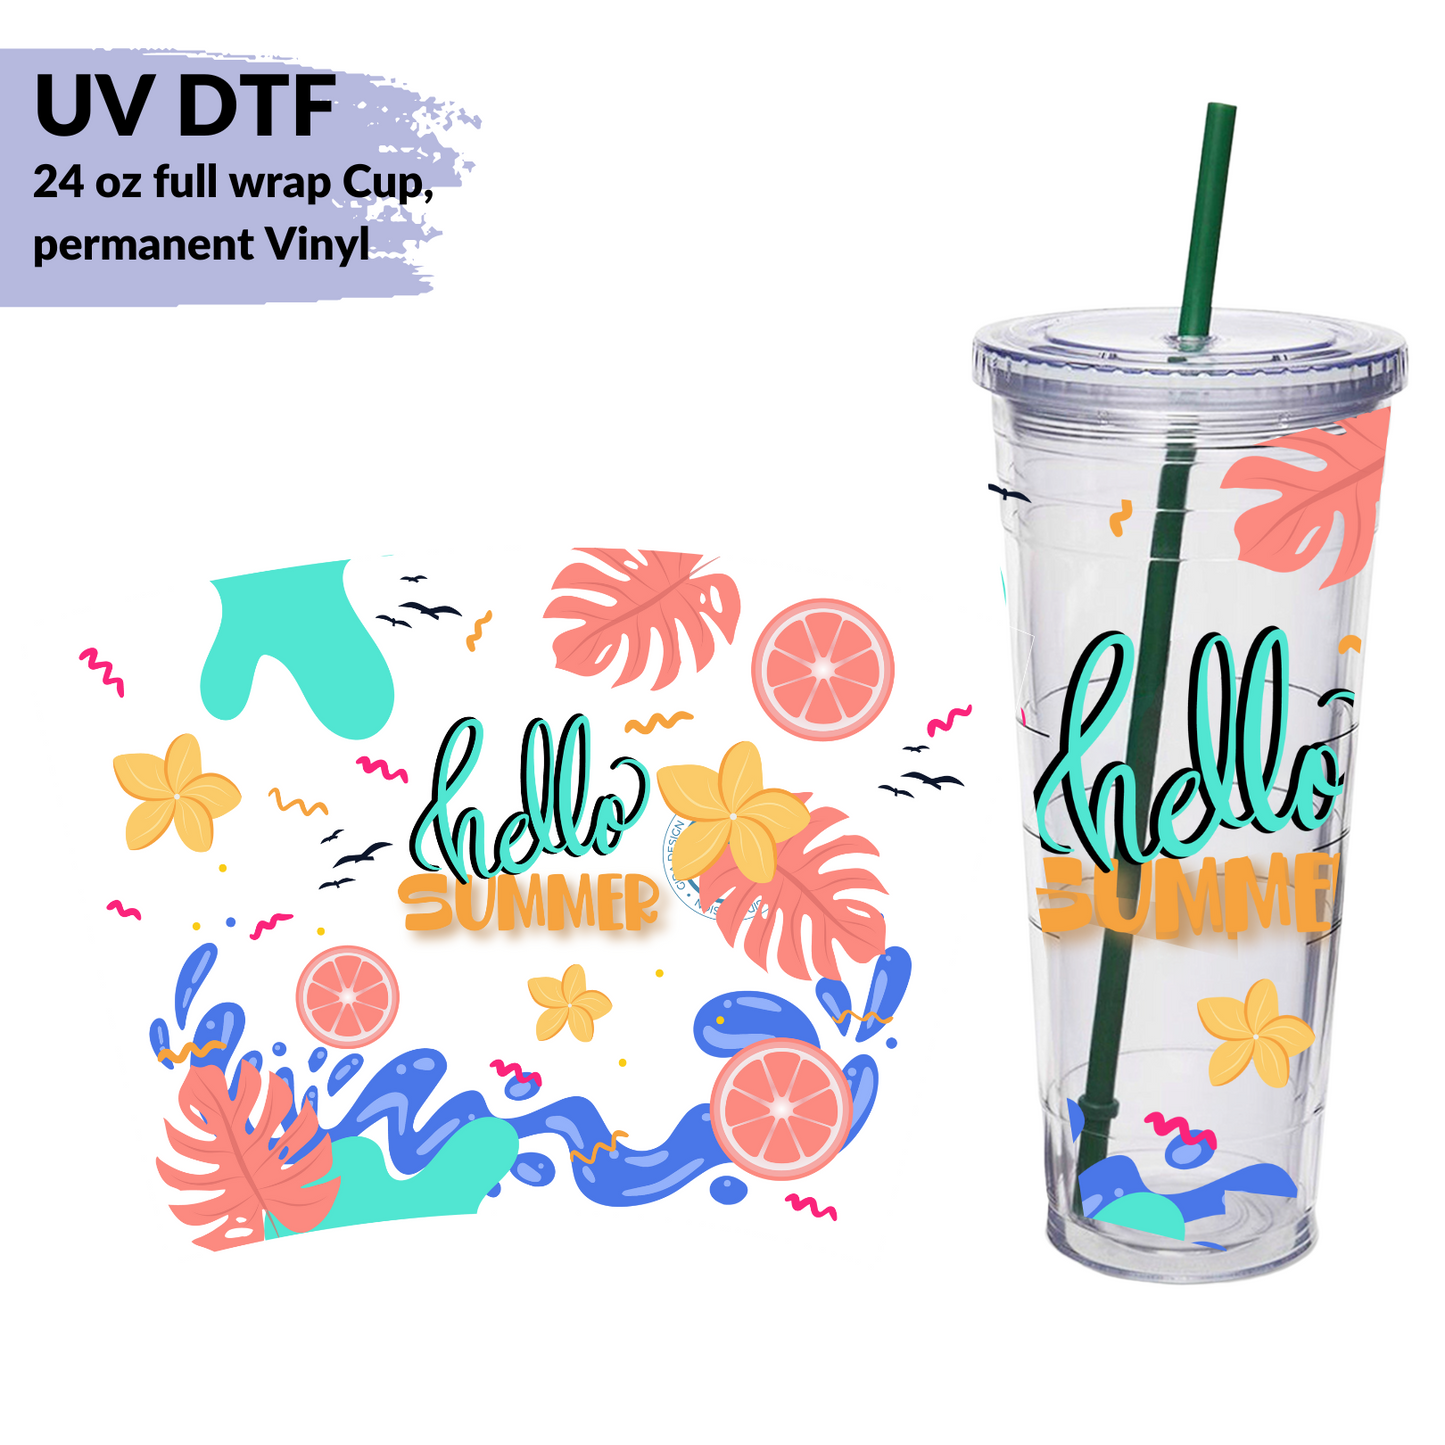 UV DTF -  HELLO Summer 24 oz Permanent wrap